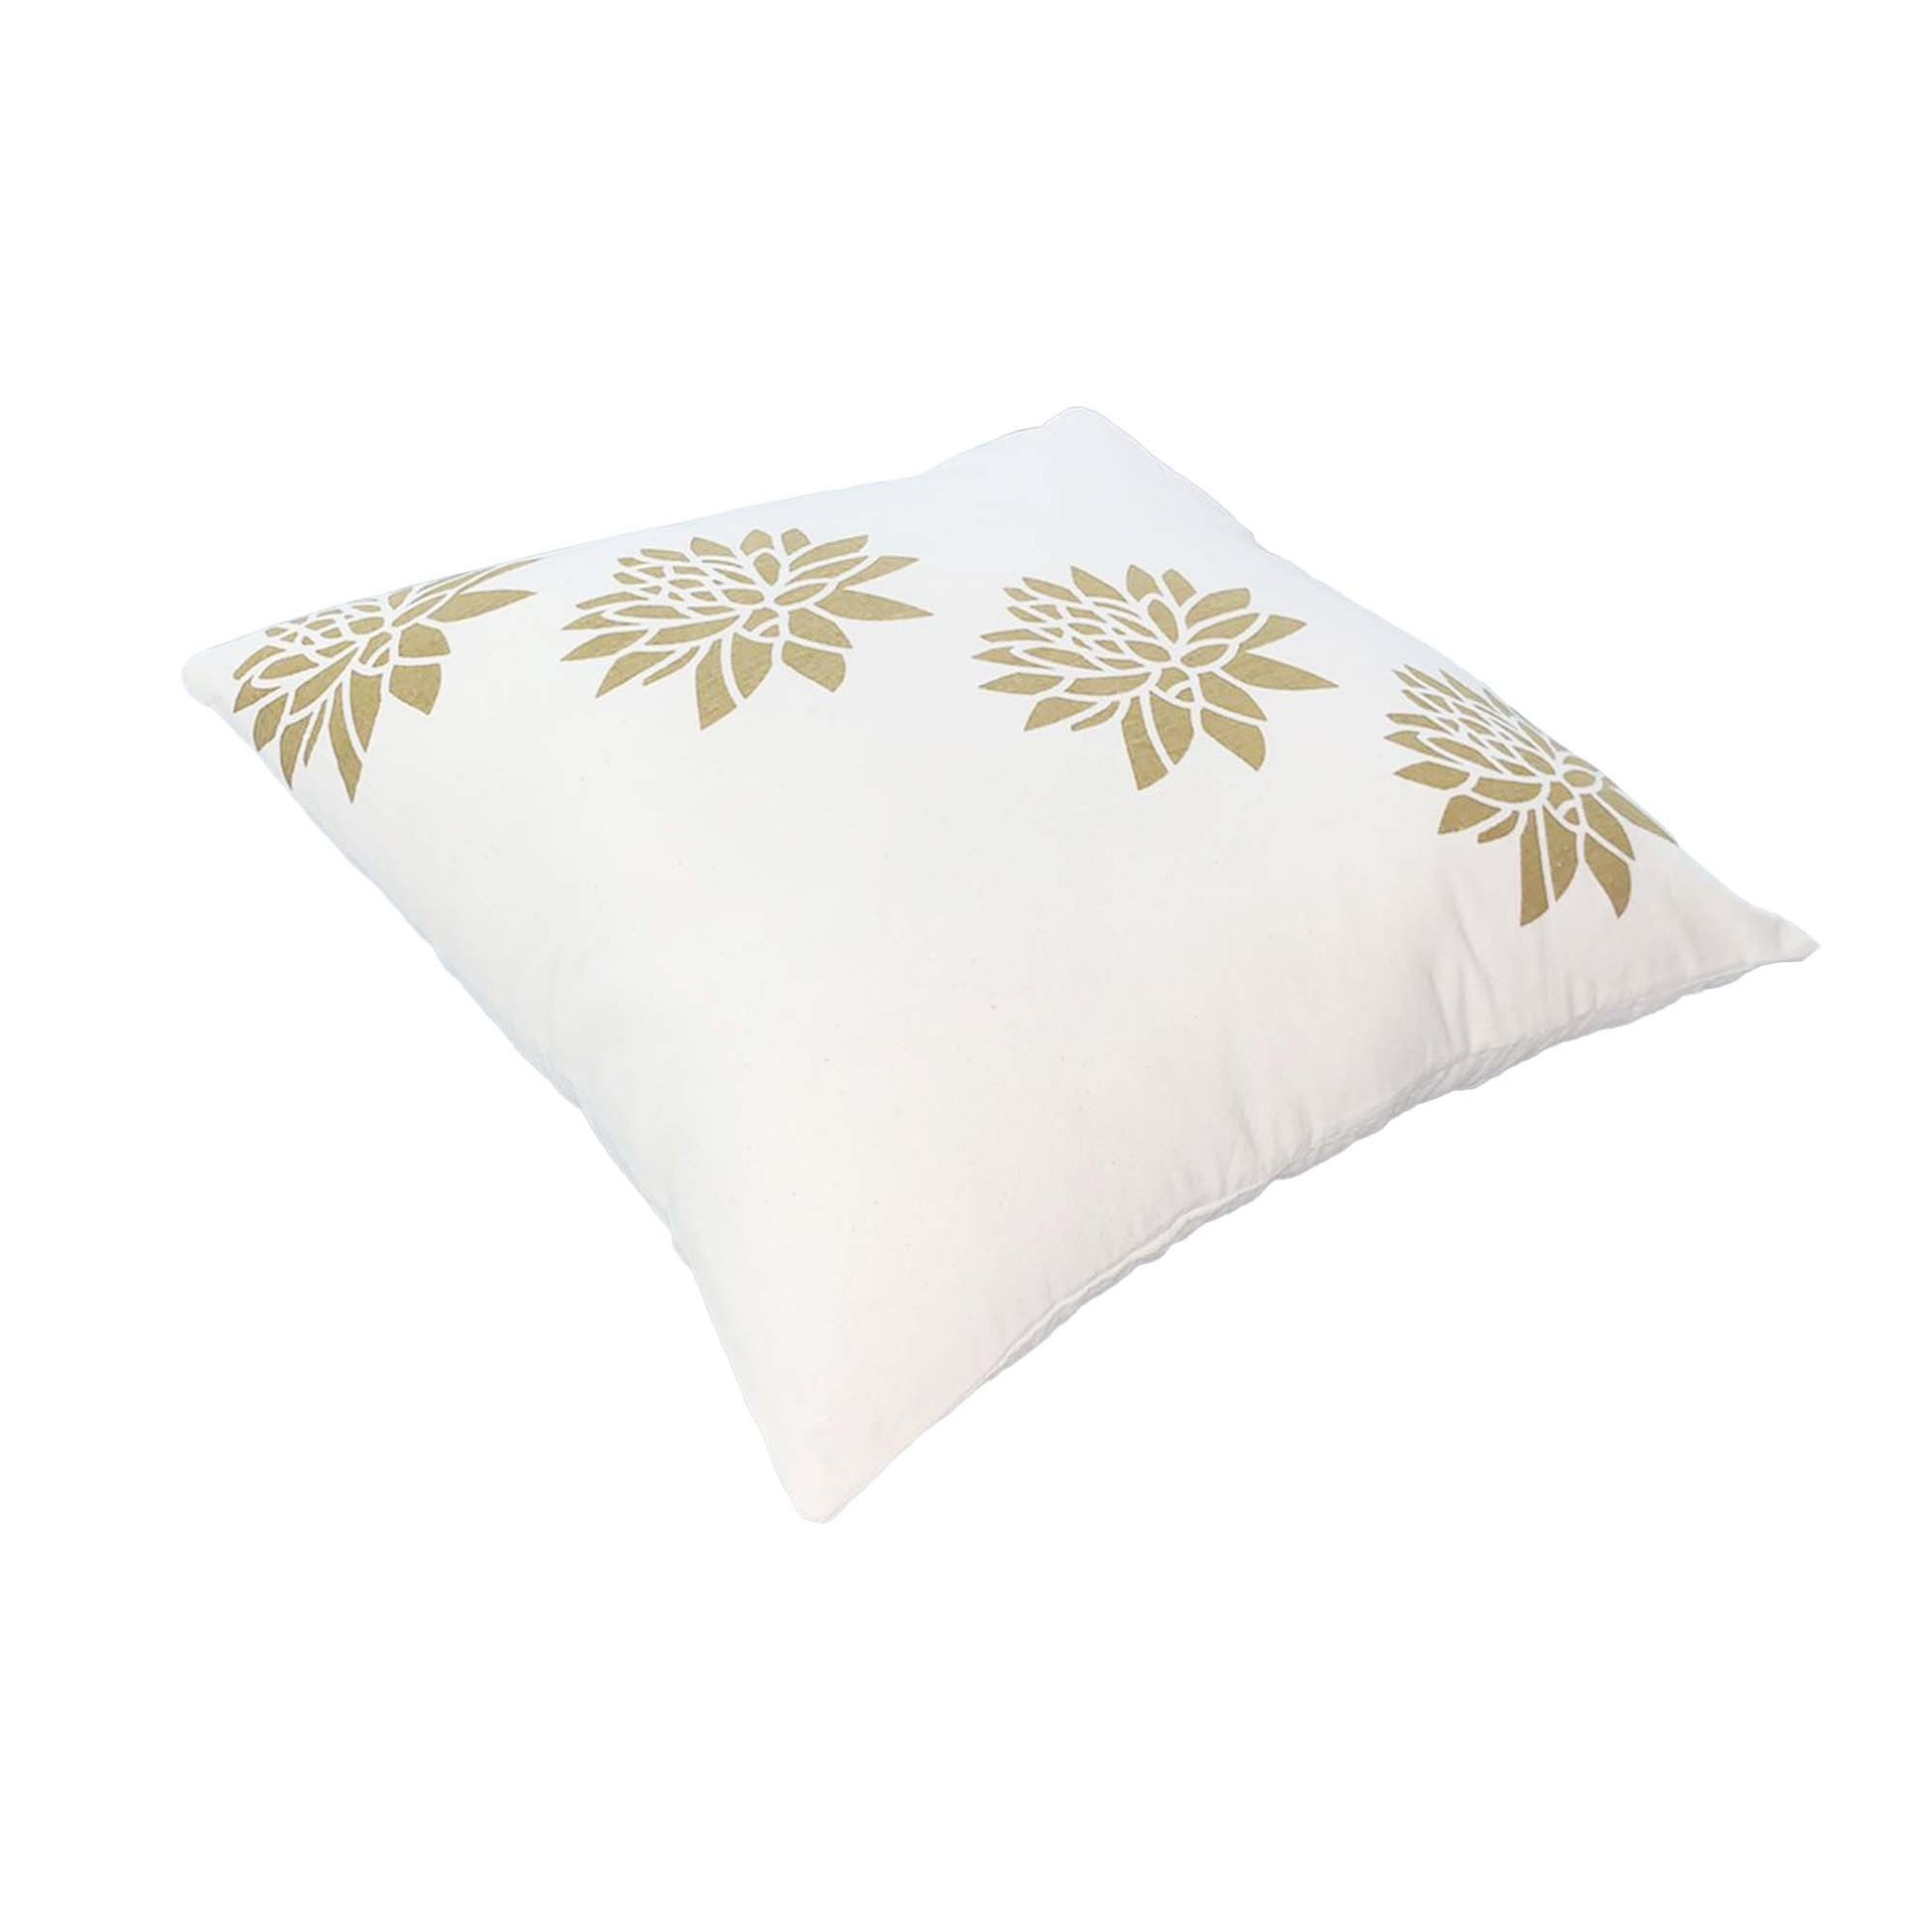 18 x 18 Square Accent Pillow, Soft Cotton Cover white-cotton